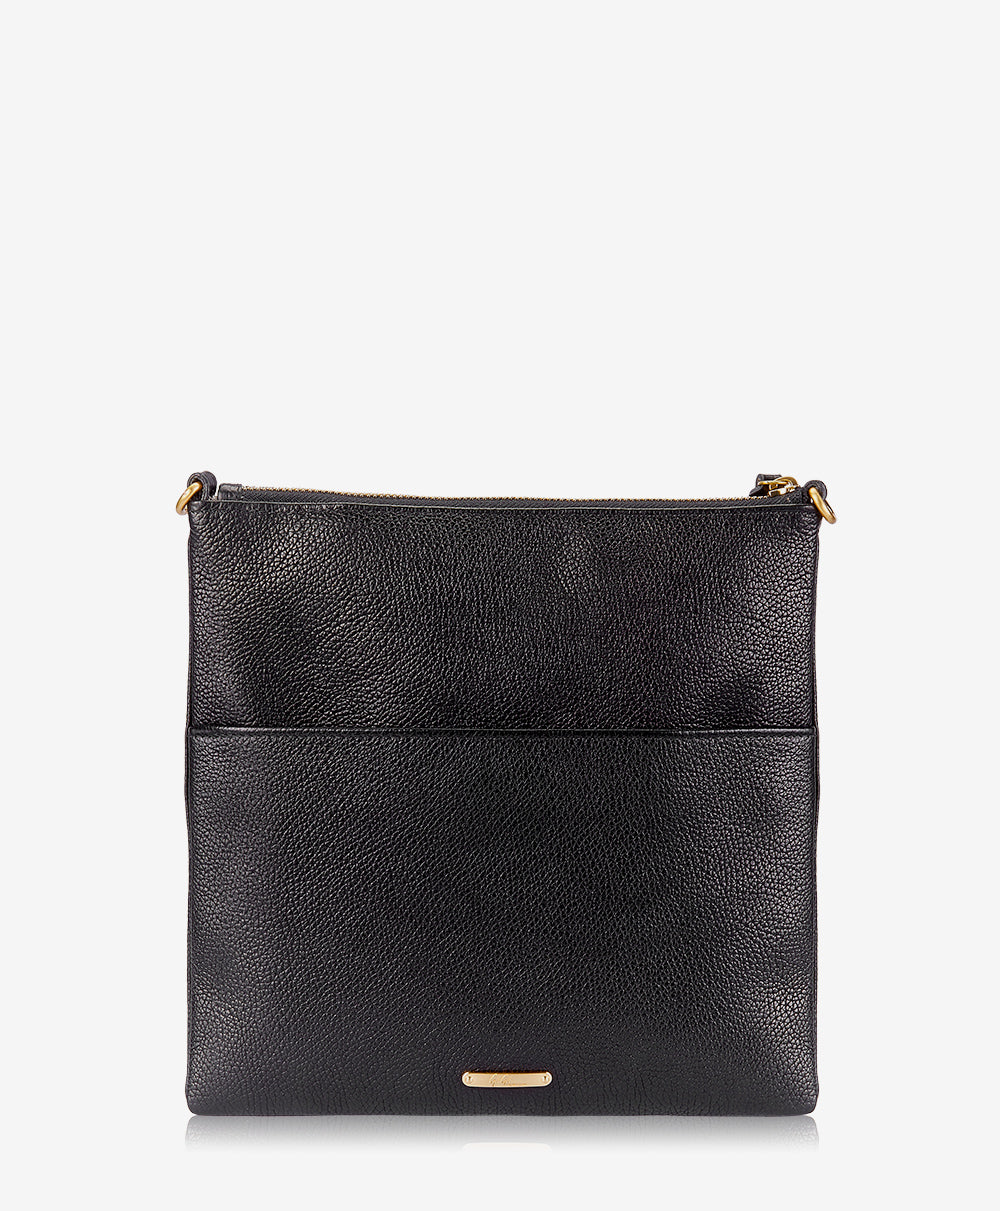 Kit Messenger Bag | Black Pebble Grain Leather